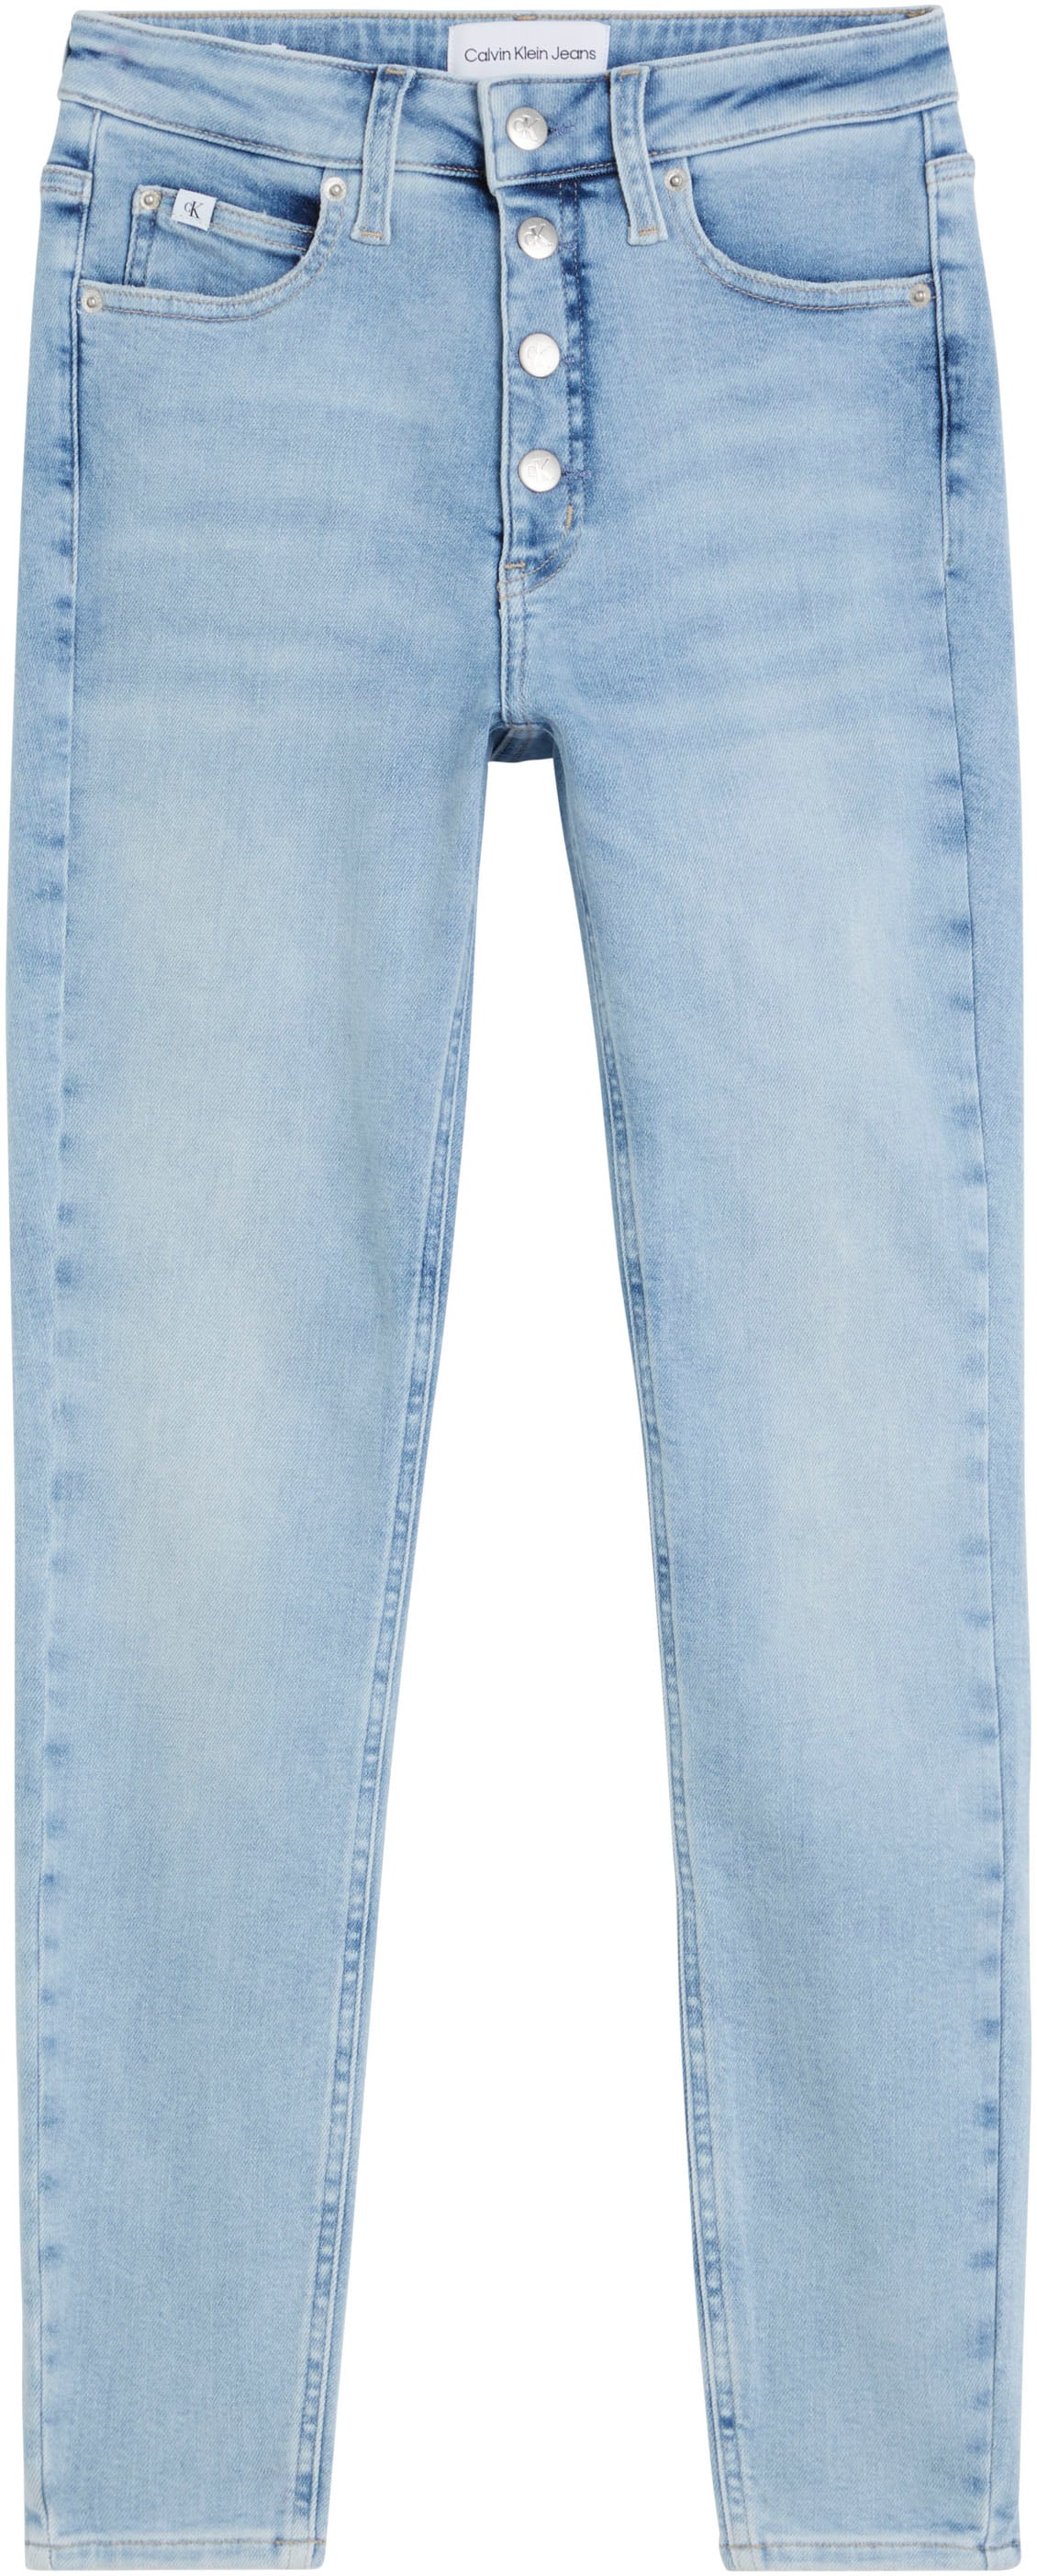 Calvin Klein Jeans Ankle-Jeans »HIGH RISE SUPER SKINNY ANKLE« von Calvin Klein Jeans